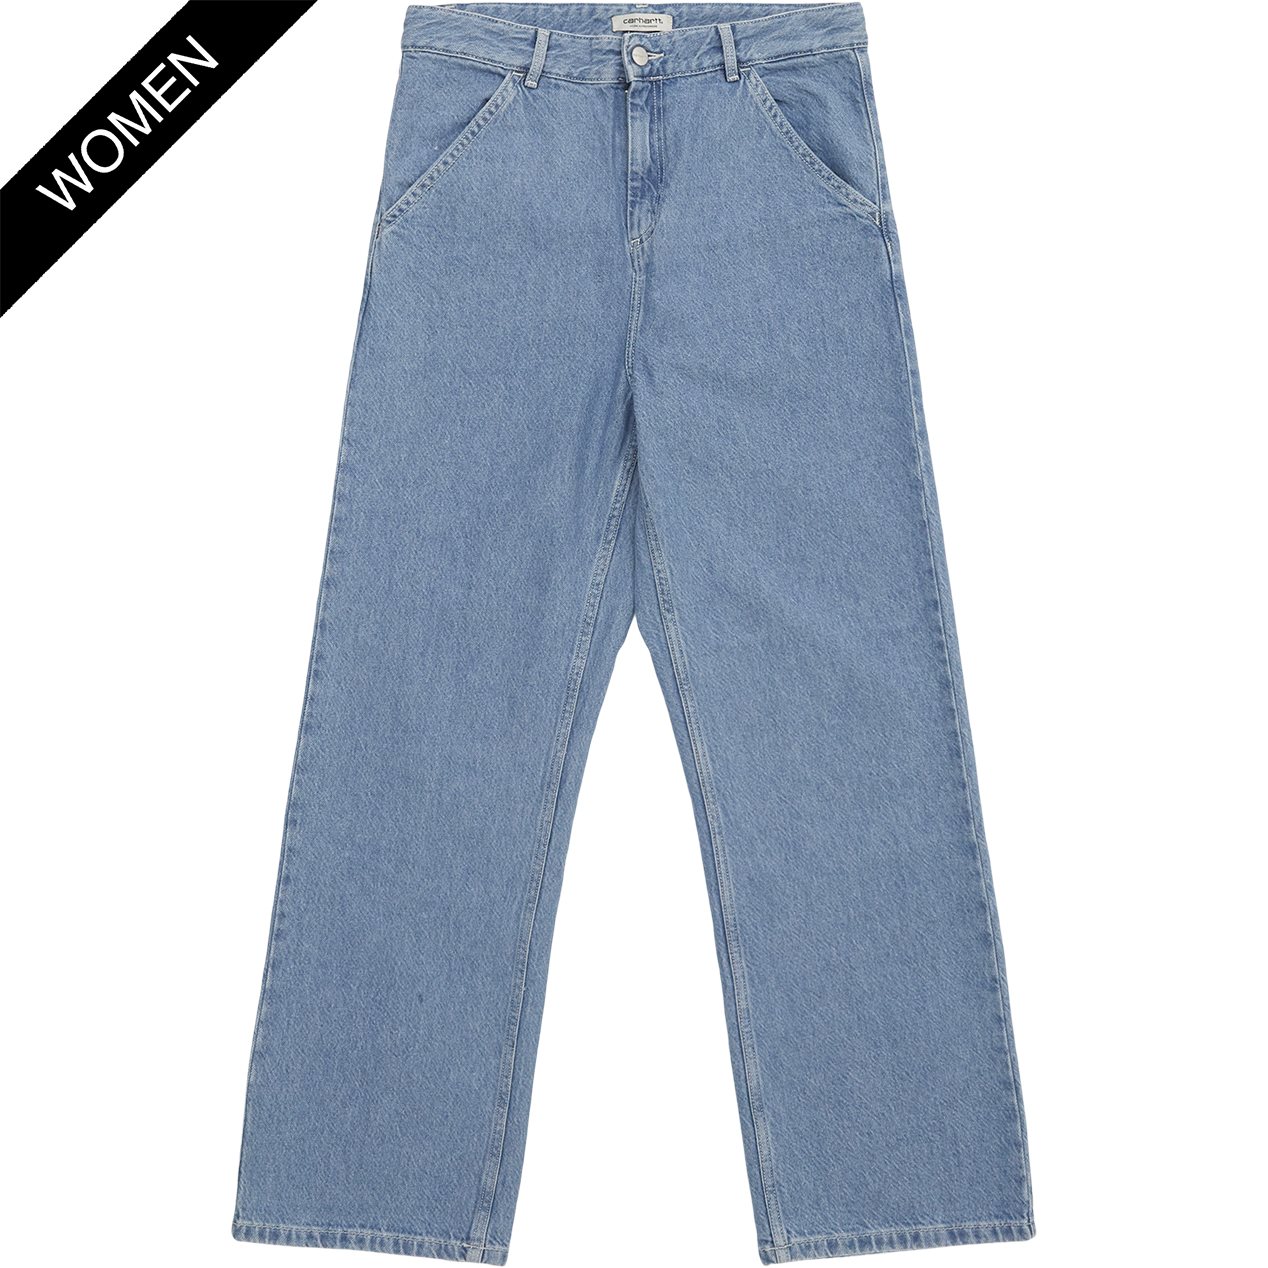 Carhartt WIP Women Jeans W SIMPLE PANT I030486.0160 Denim